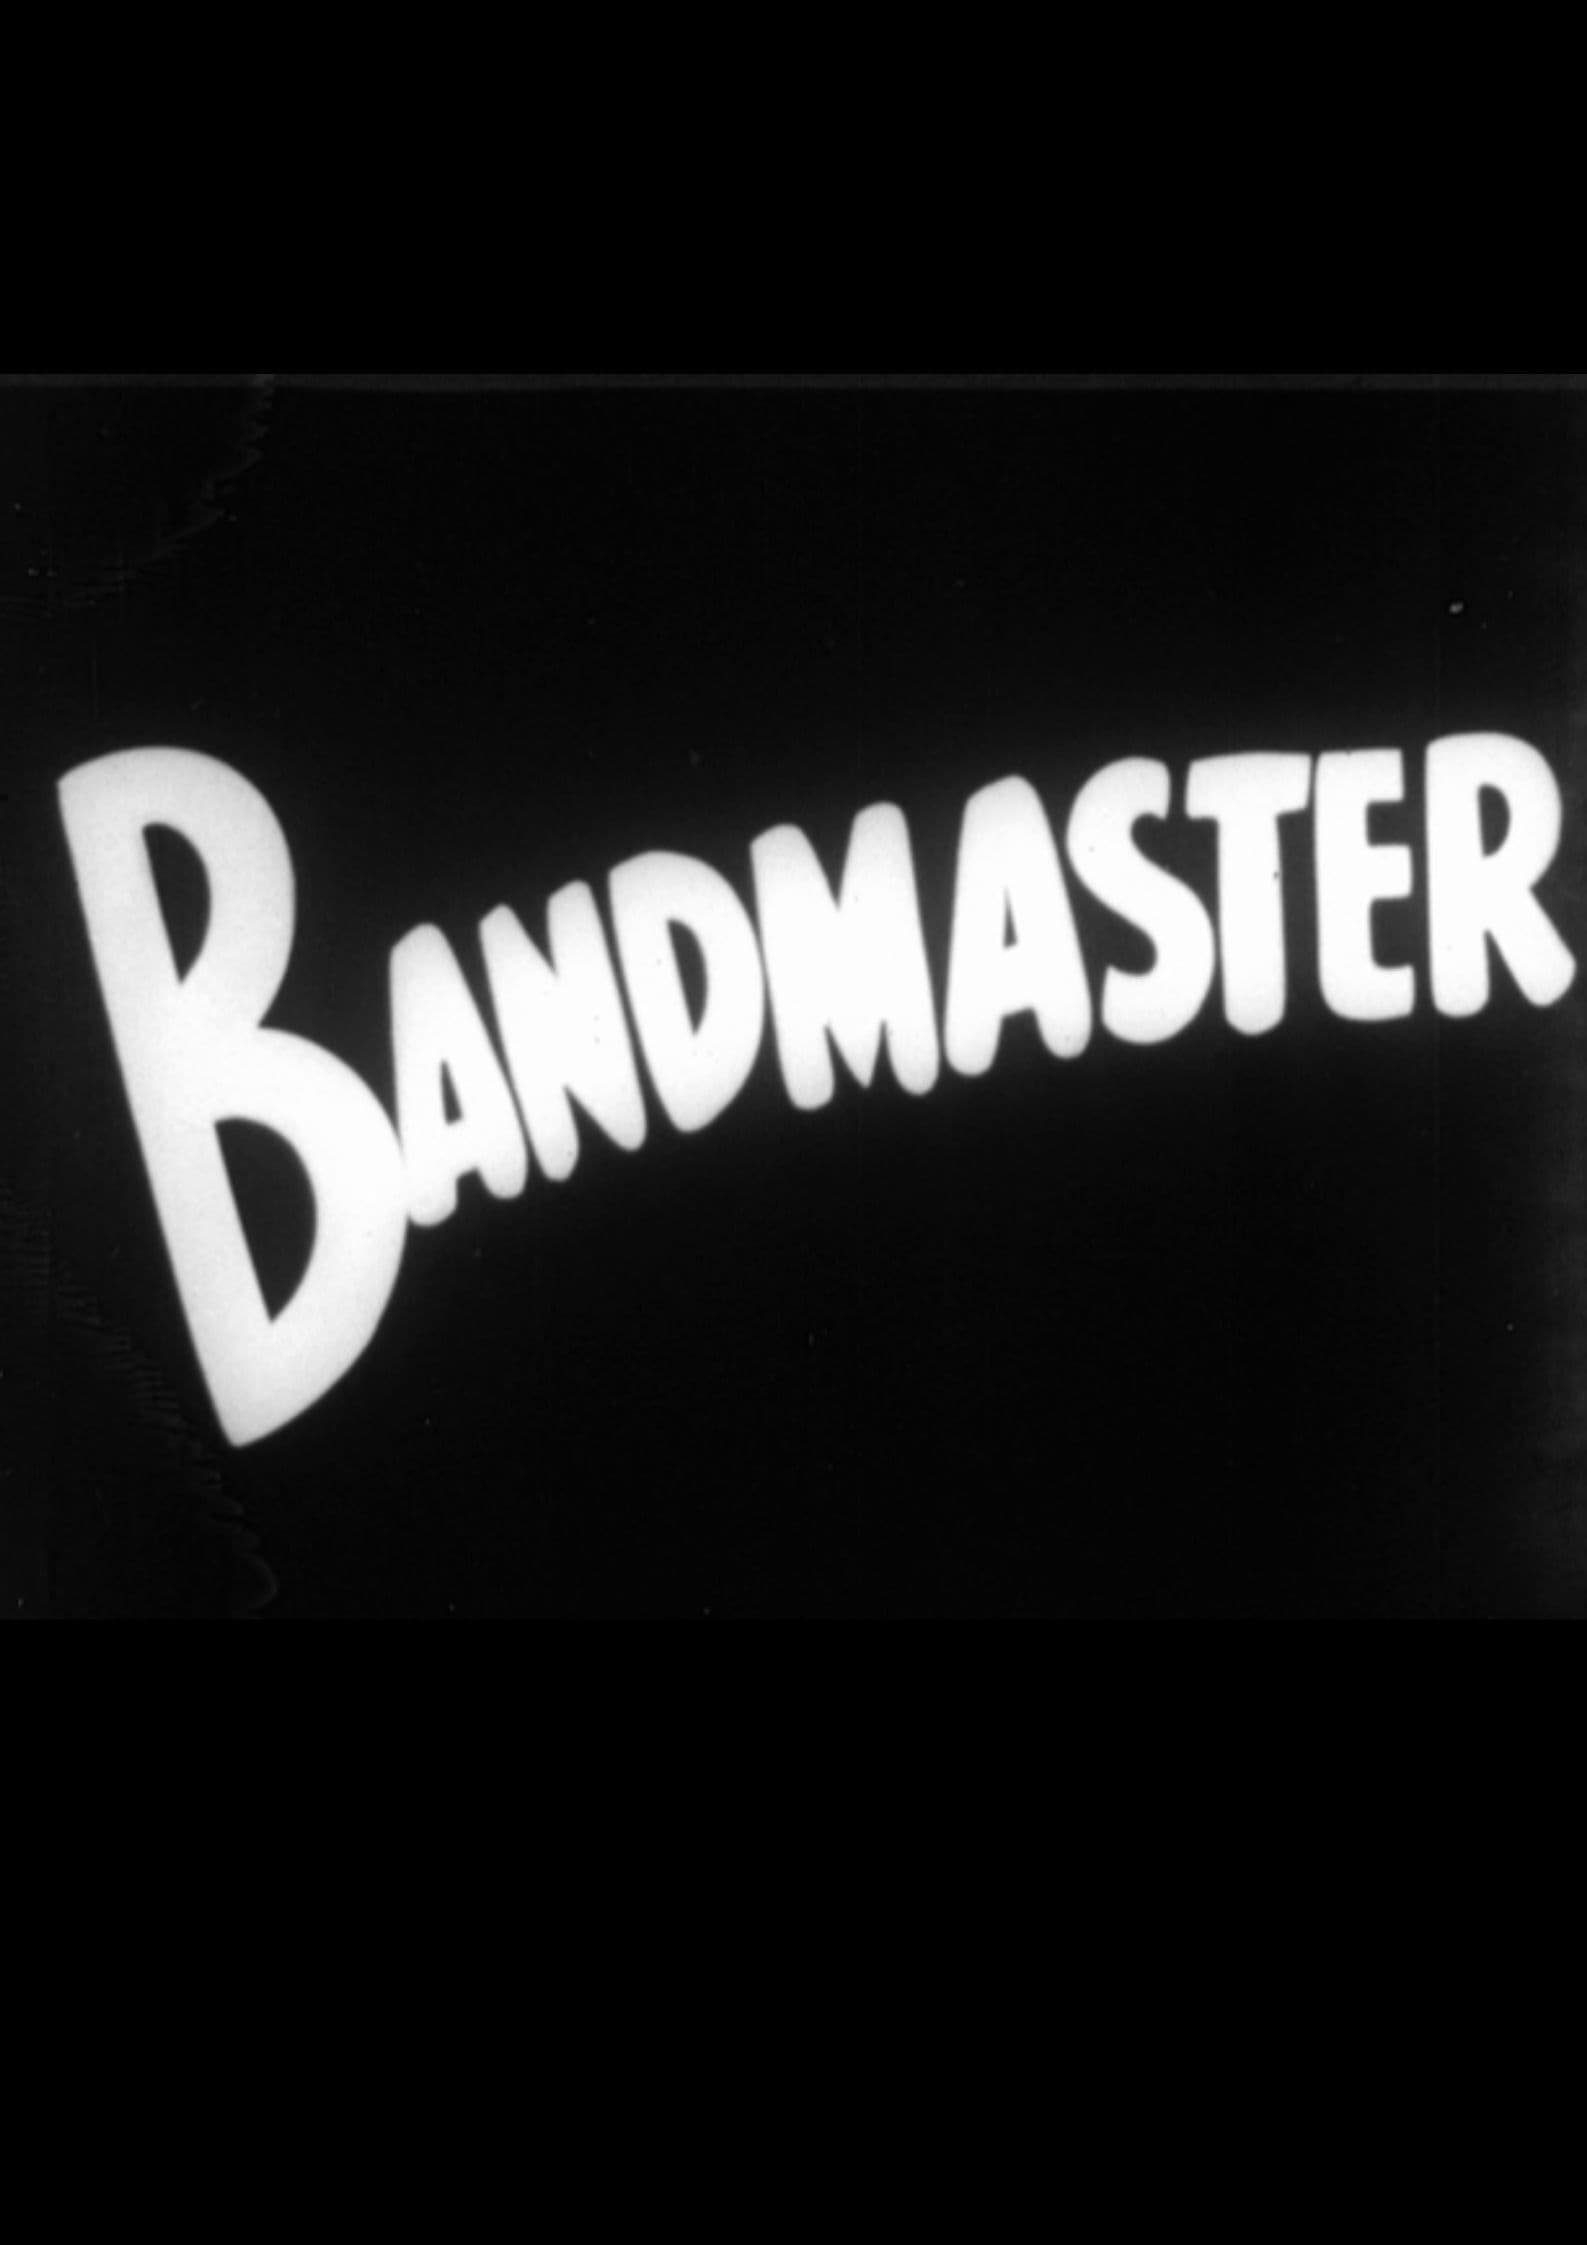 The Bandmaster